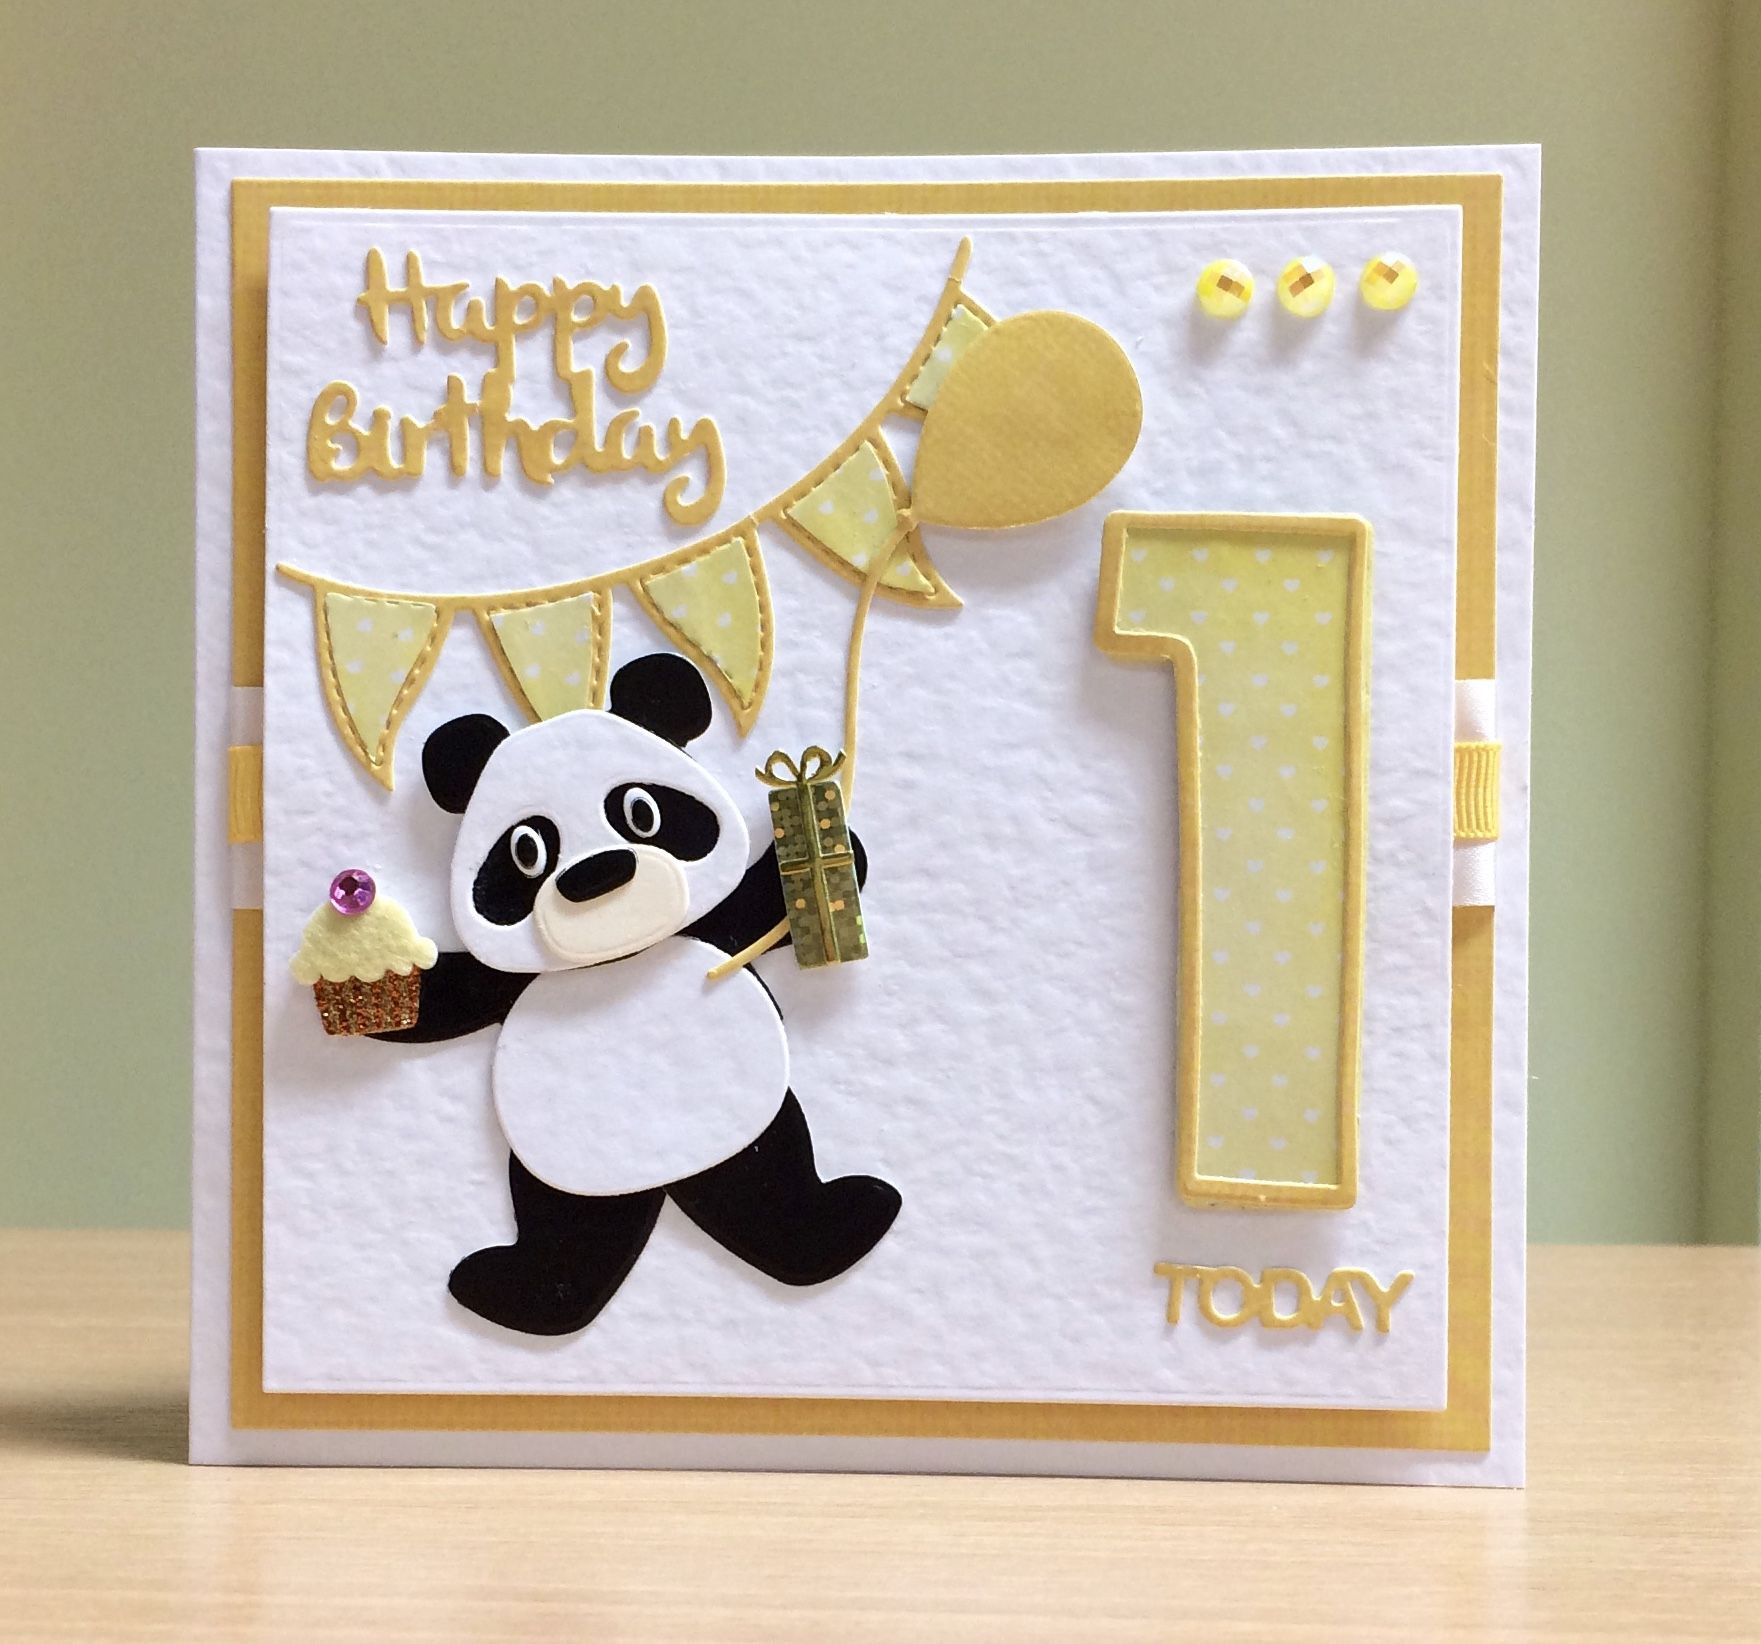 Easy Birthday Card Ideas For Friends Handmade Birthday Card Ideas Ideas For Making Birthday Cards For